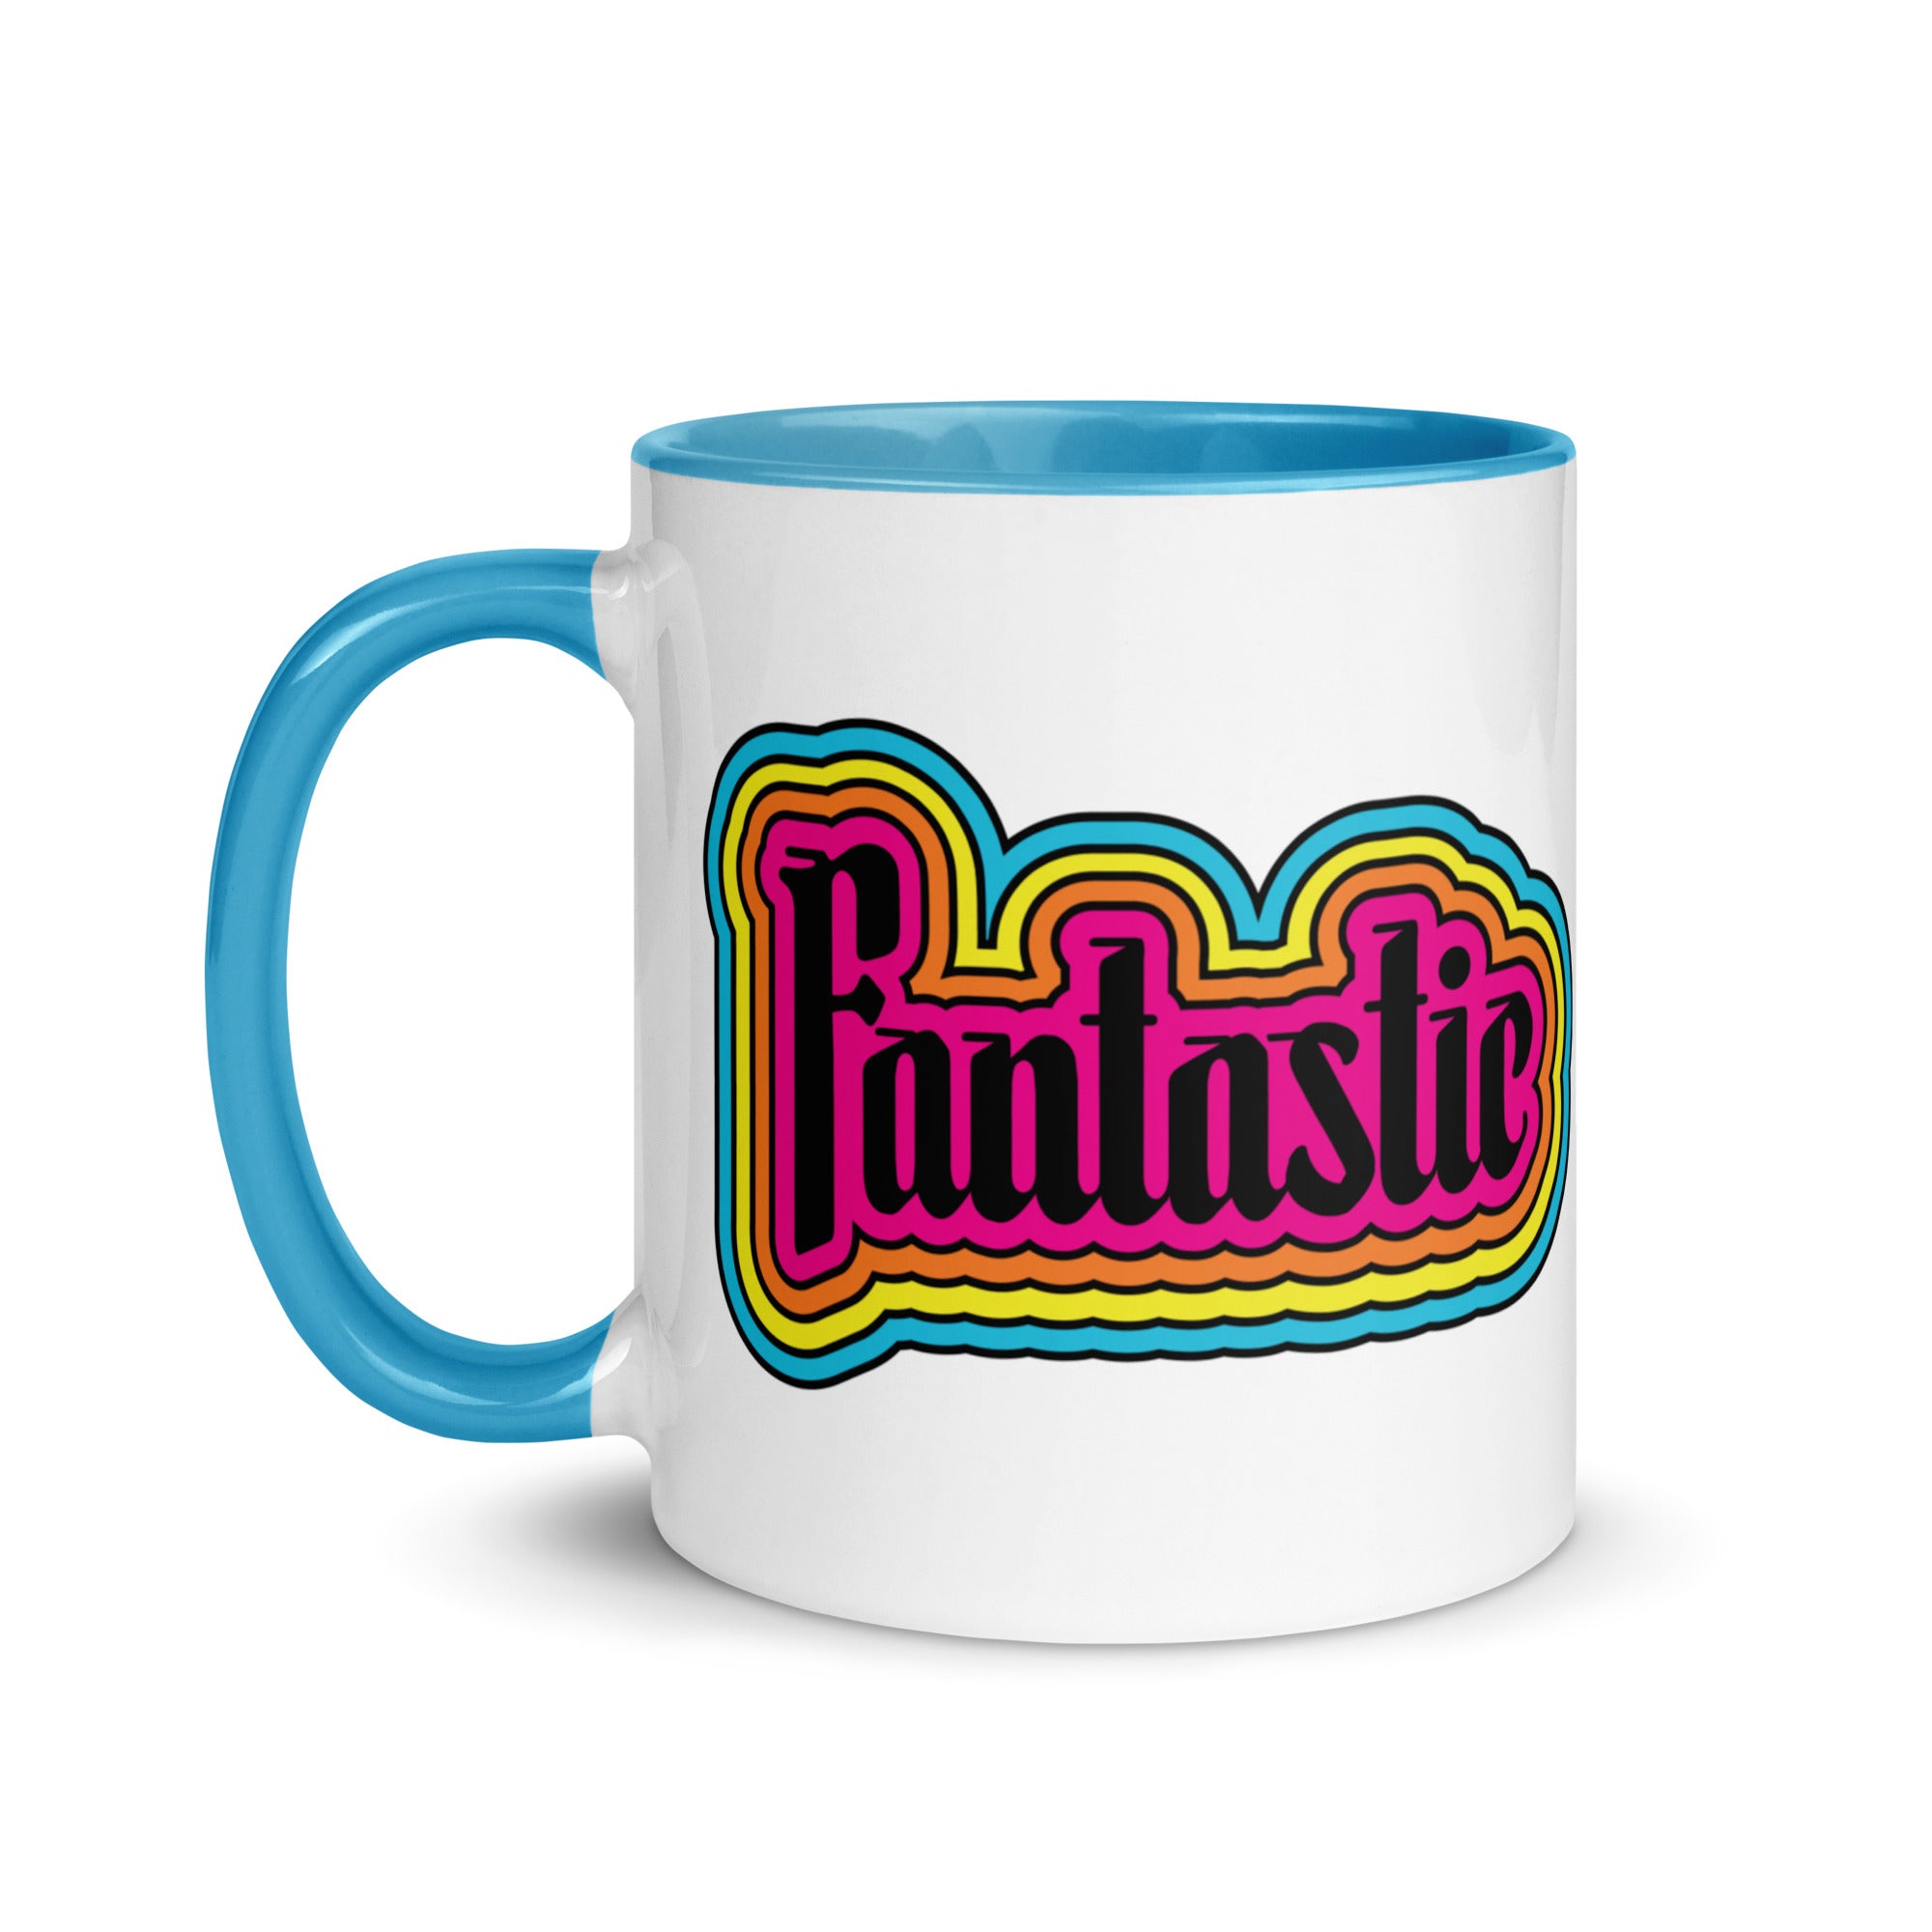 11 oz mug with the word fantastic with rainbow design around it